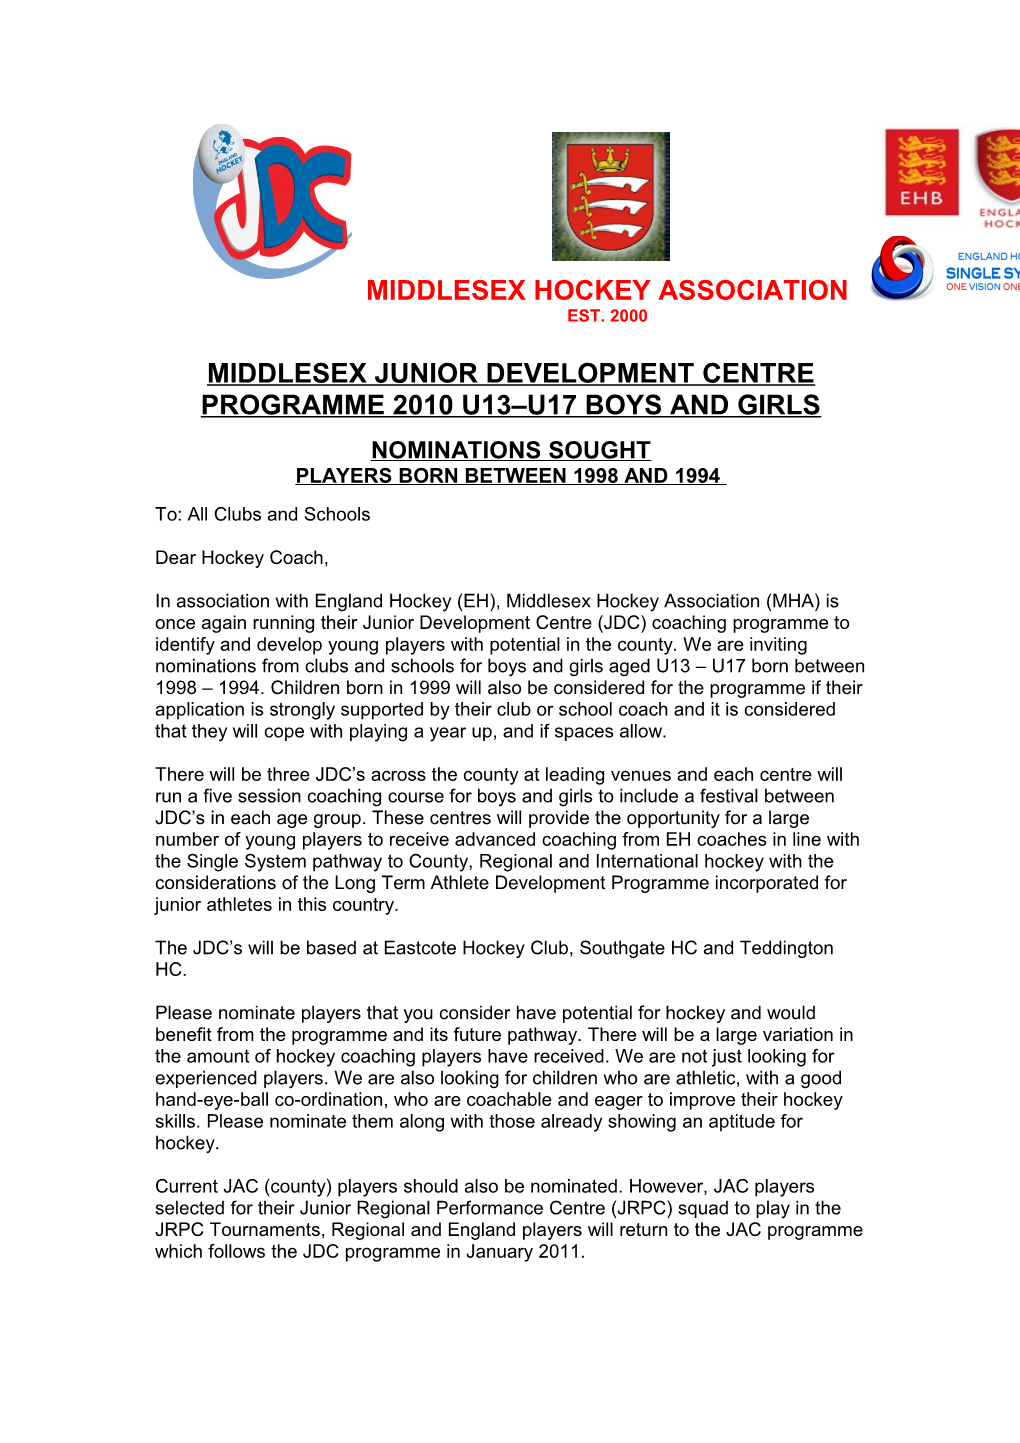 Middlesex Junior Development Centre Programme 2010 U13 U17 Boys and Girls